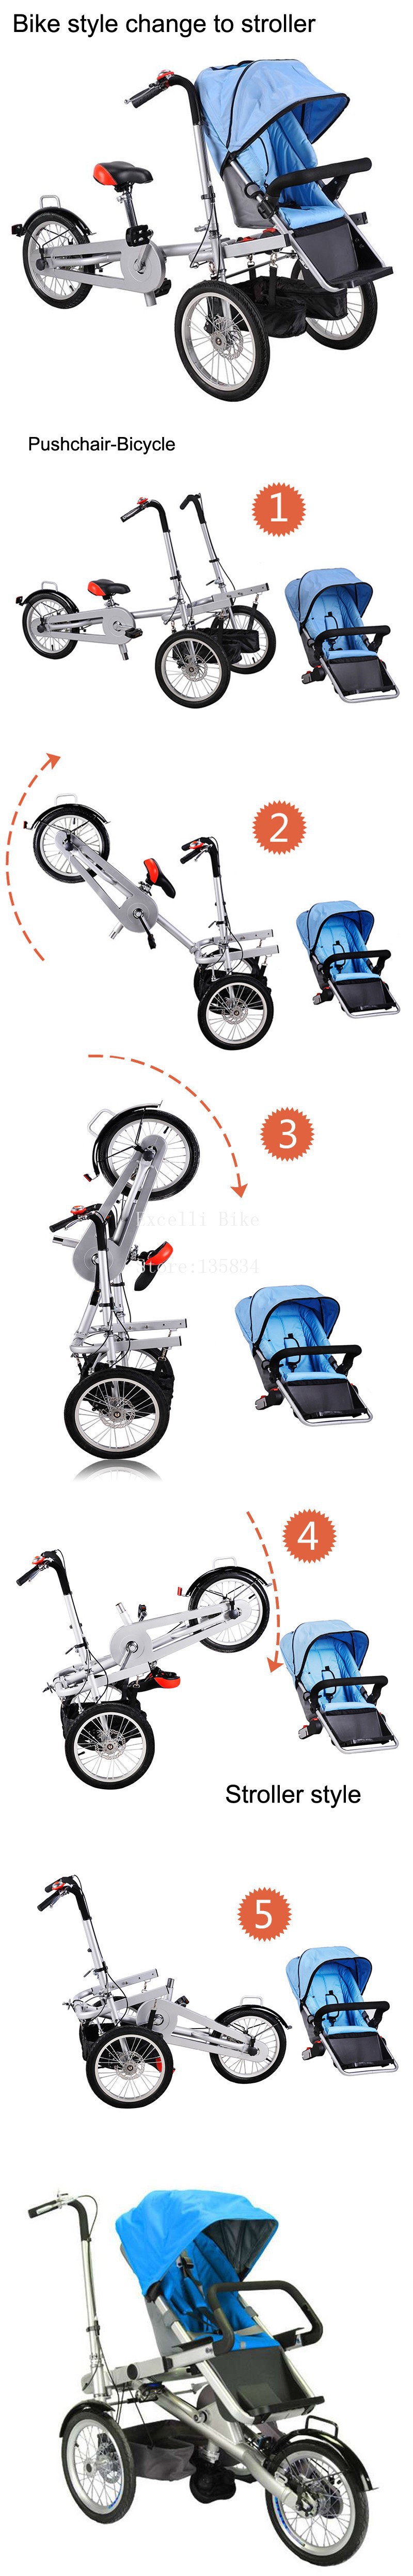 H02-Taga Pushchair-Bicycle Folding Taga Bike 16inch Mother Baby Stroller Bike baby stroller 3 in 1 Convertible Stroller Carriage stroller